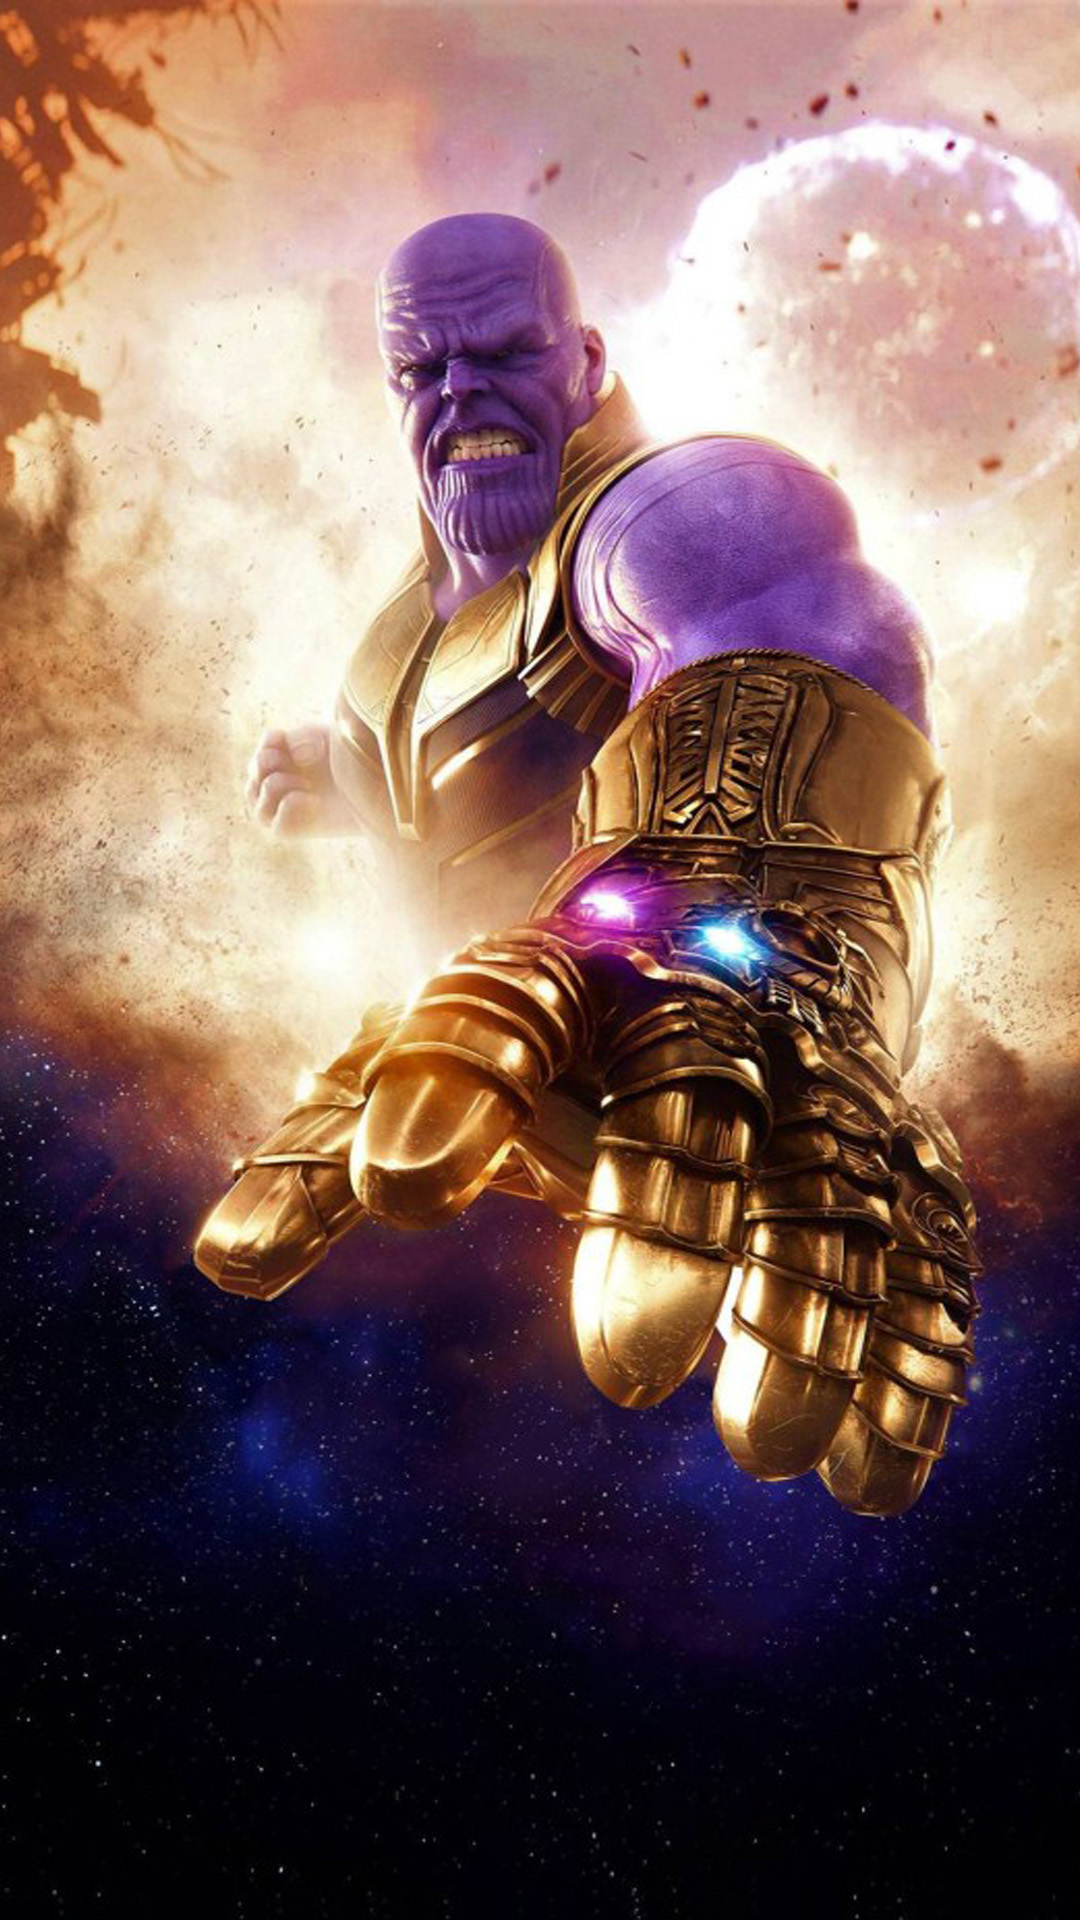 Thanos Avengers Infinity War 2018 4K Ultra HD Mobile Wallpaper